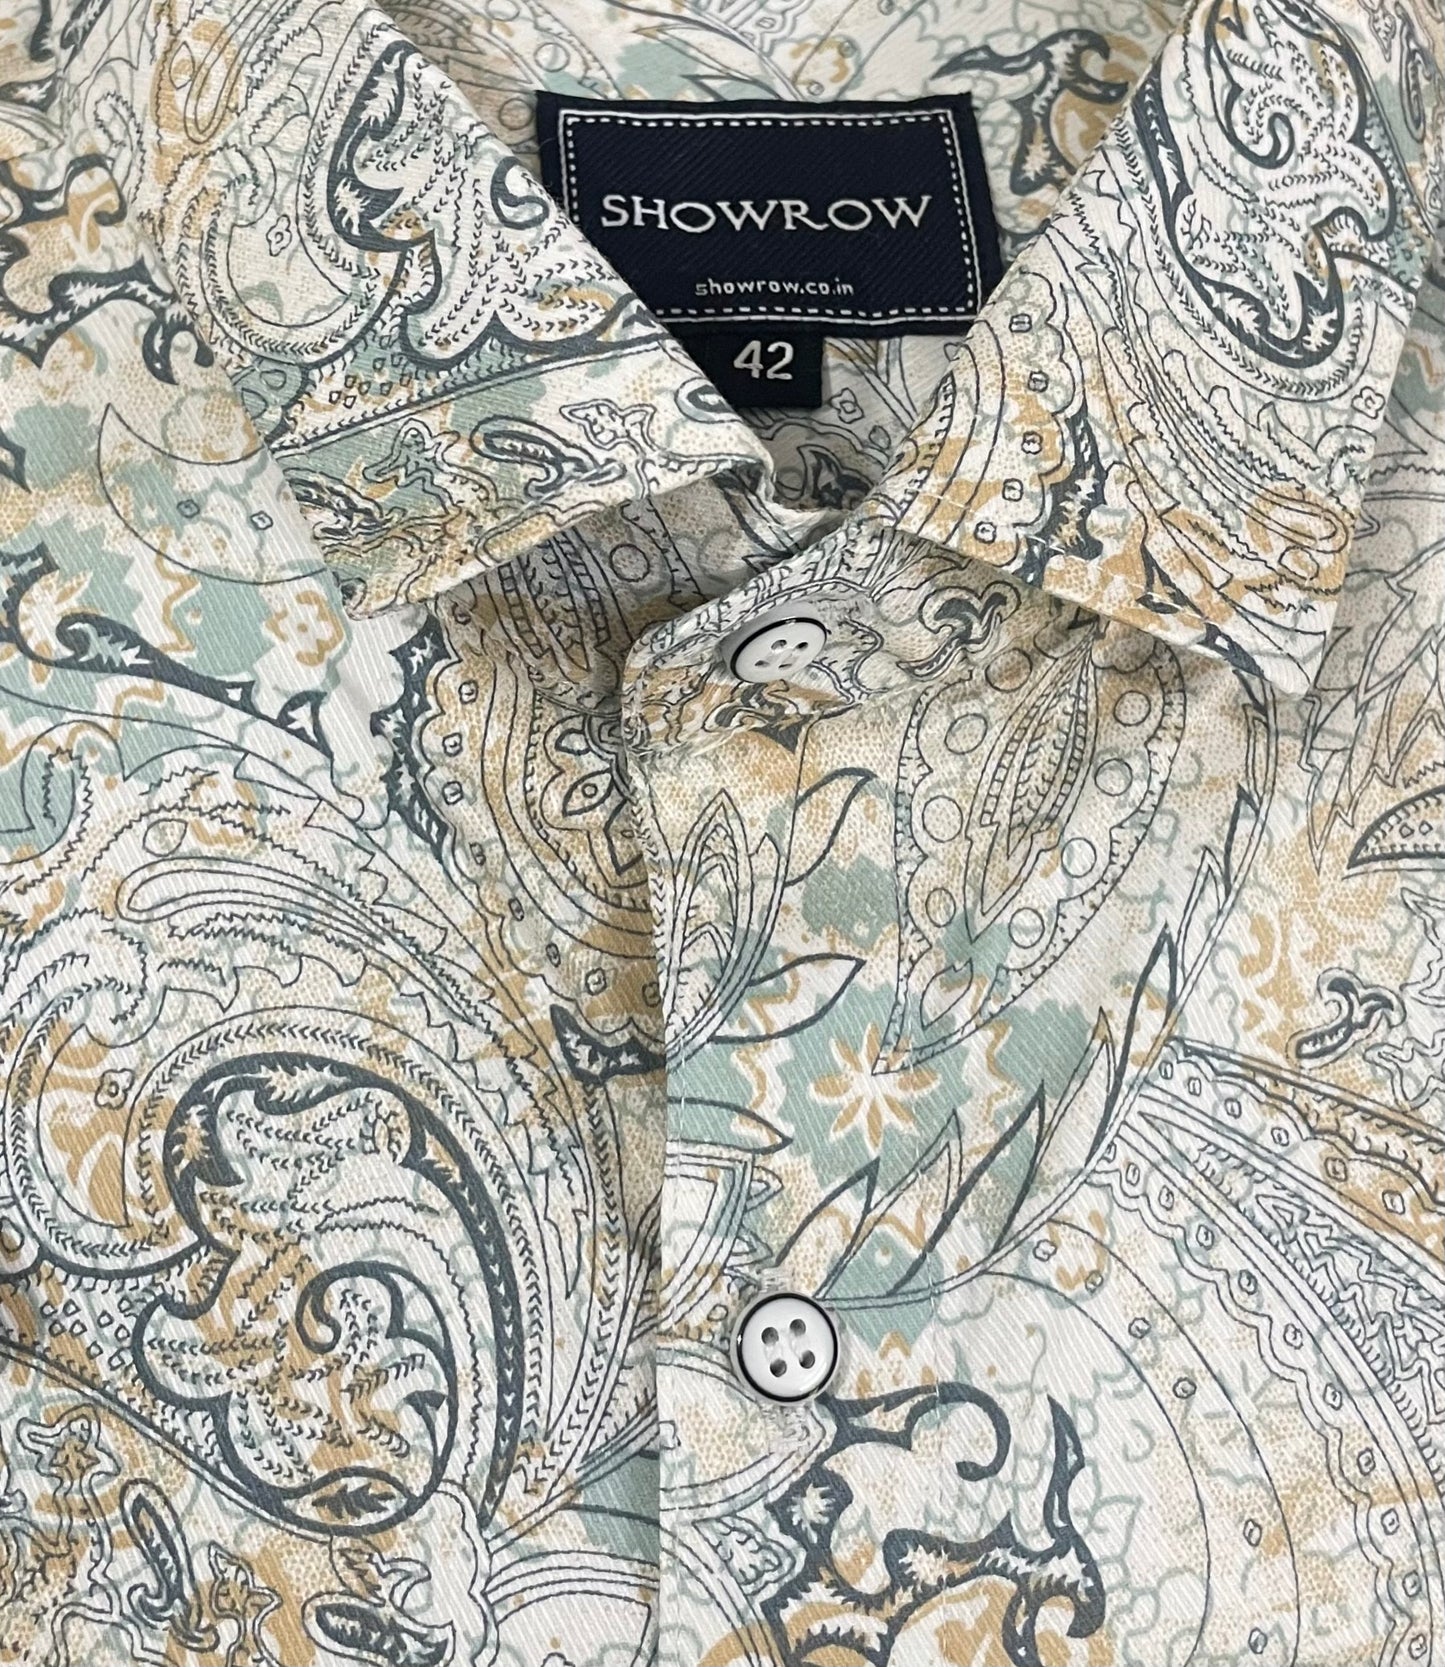 Paisley Pattern Printed Half Sleeves Stretchable Cotton Shirt